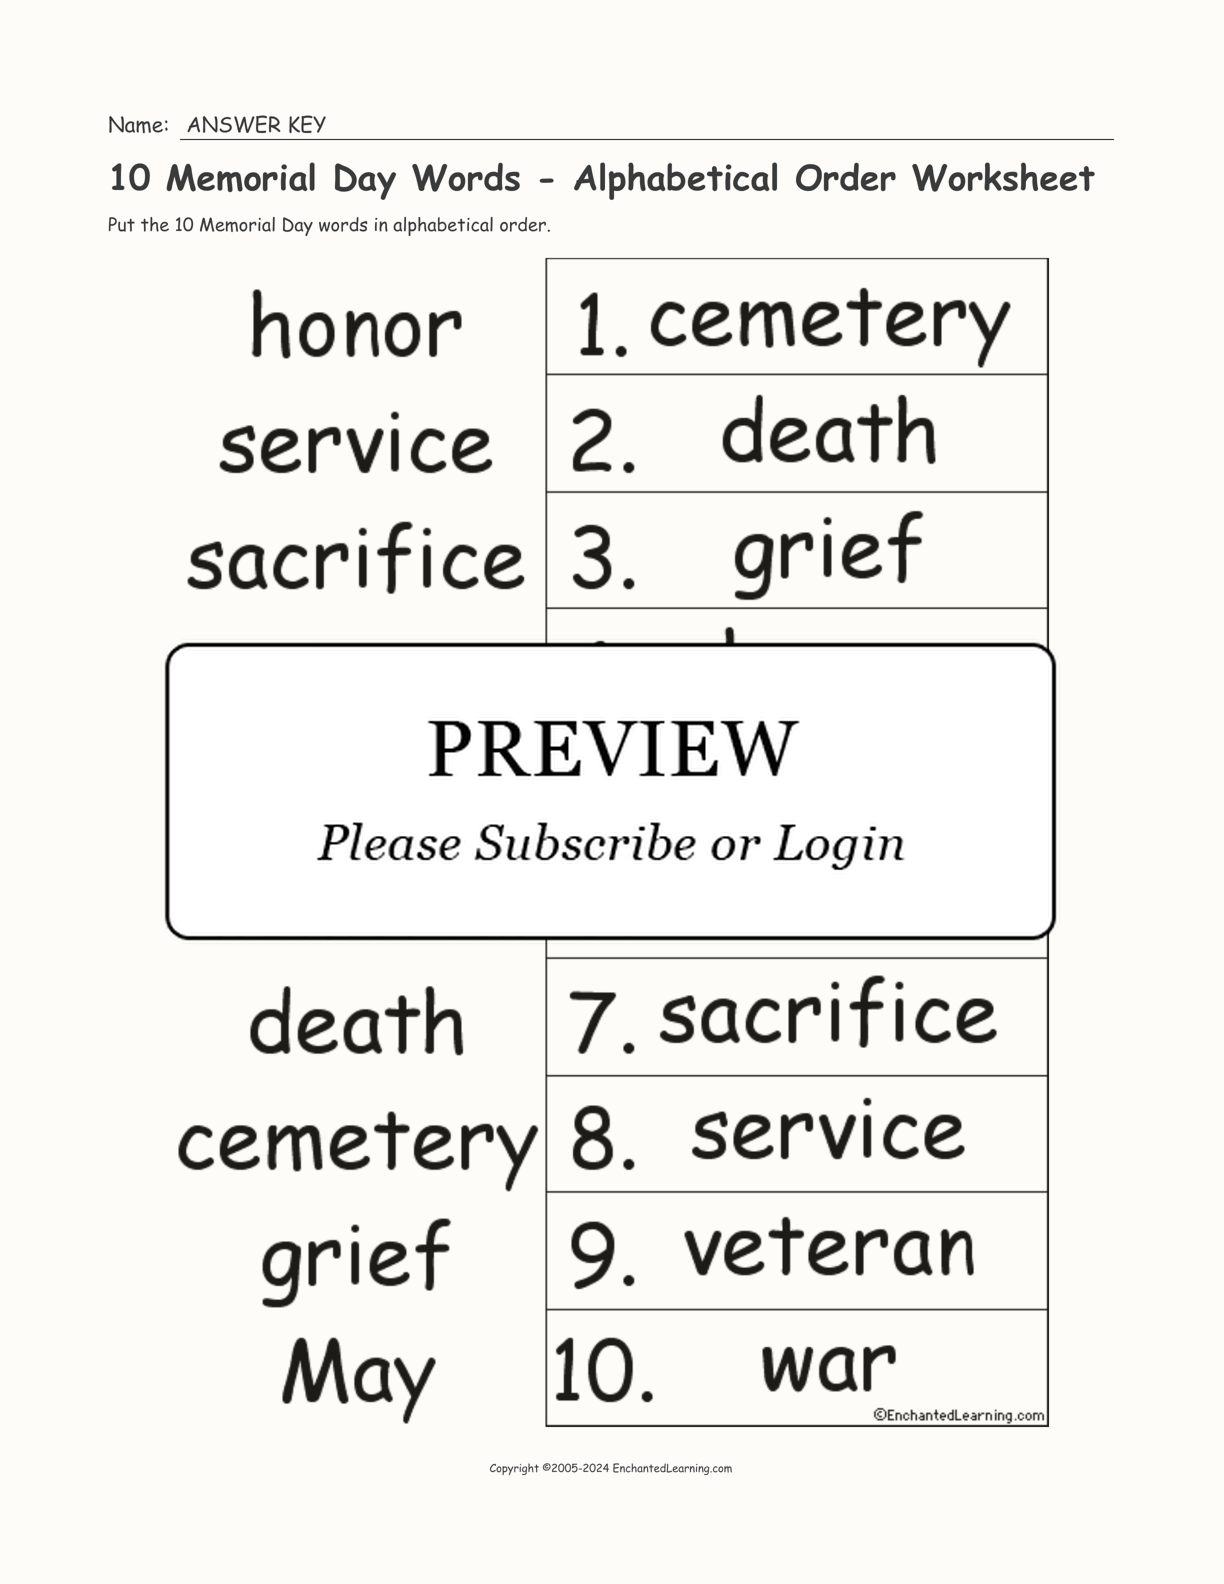 10 Memorial Day Words - Alphabetical Order Worksheet interactive worksheet page 2